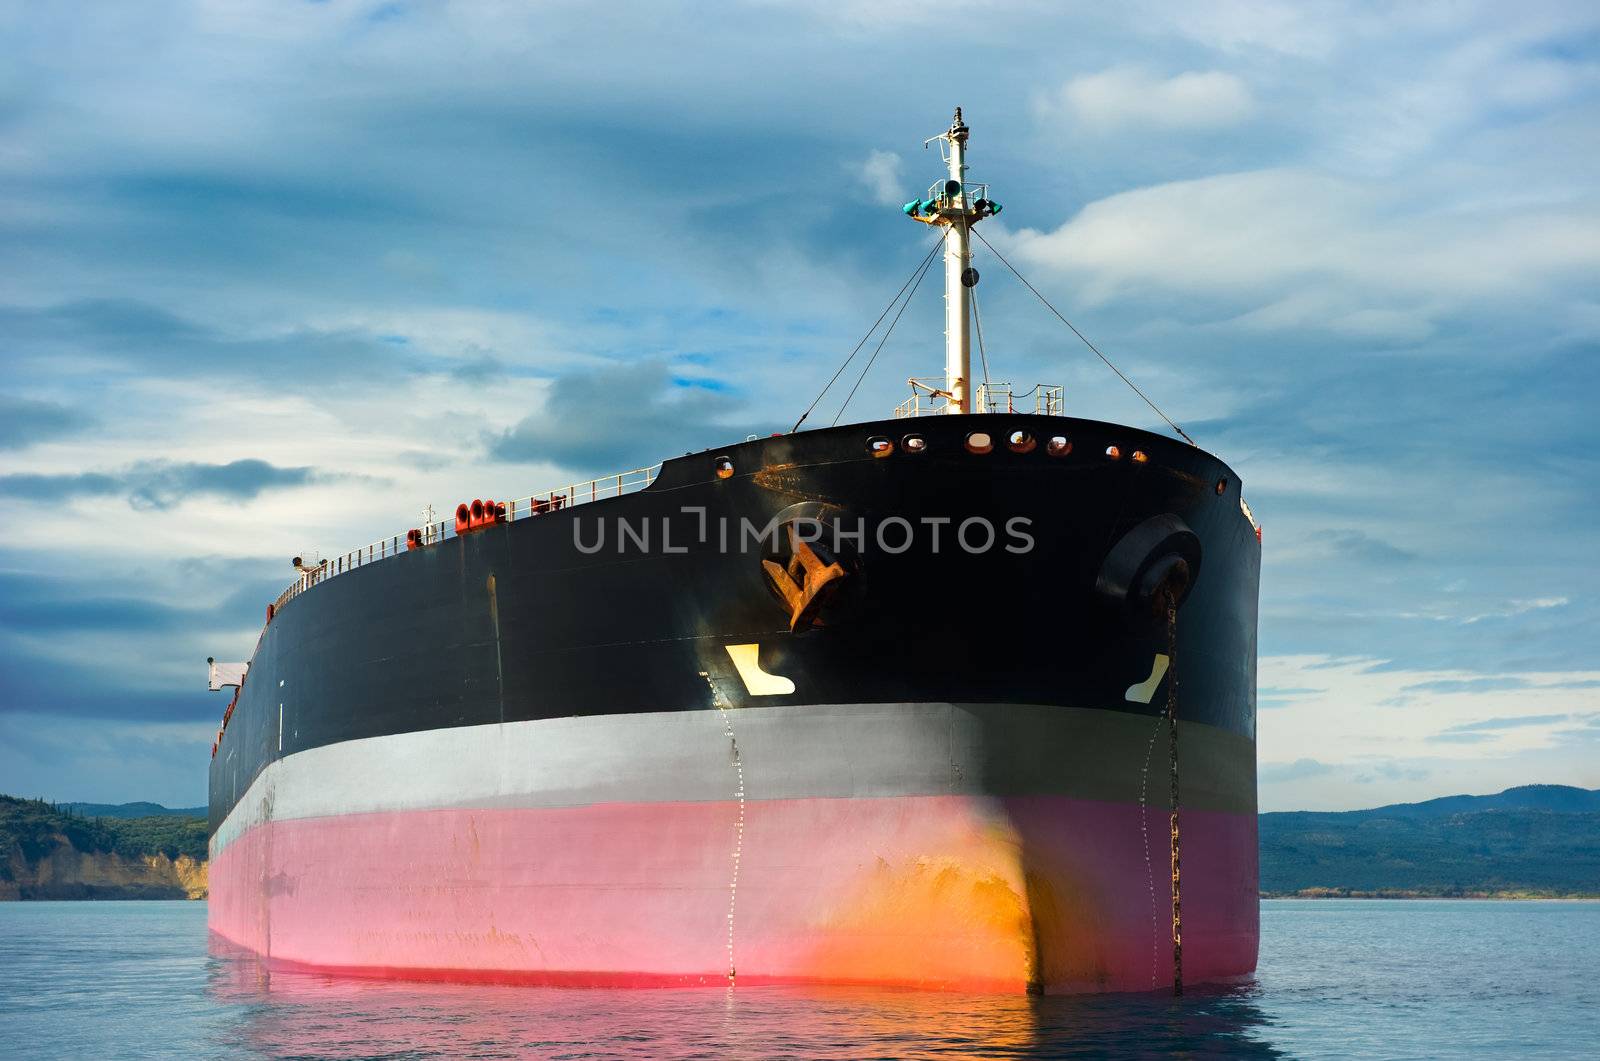 Anchored empty tanker ship under an overcast sky